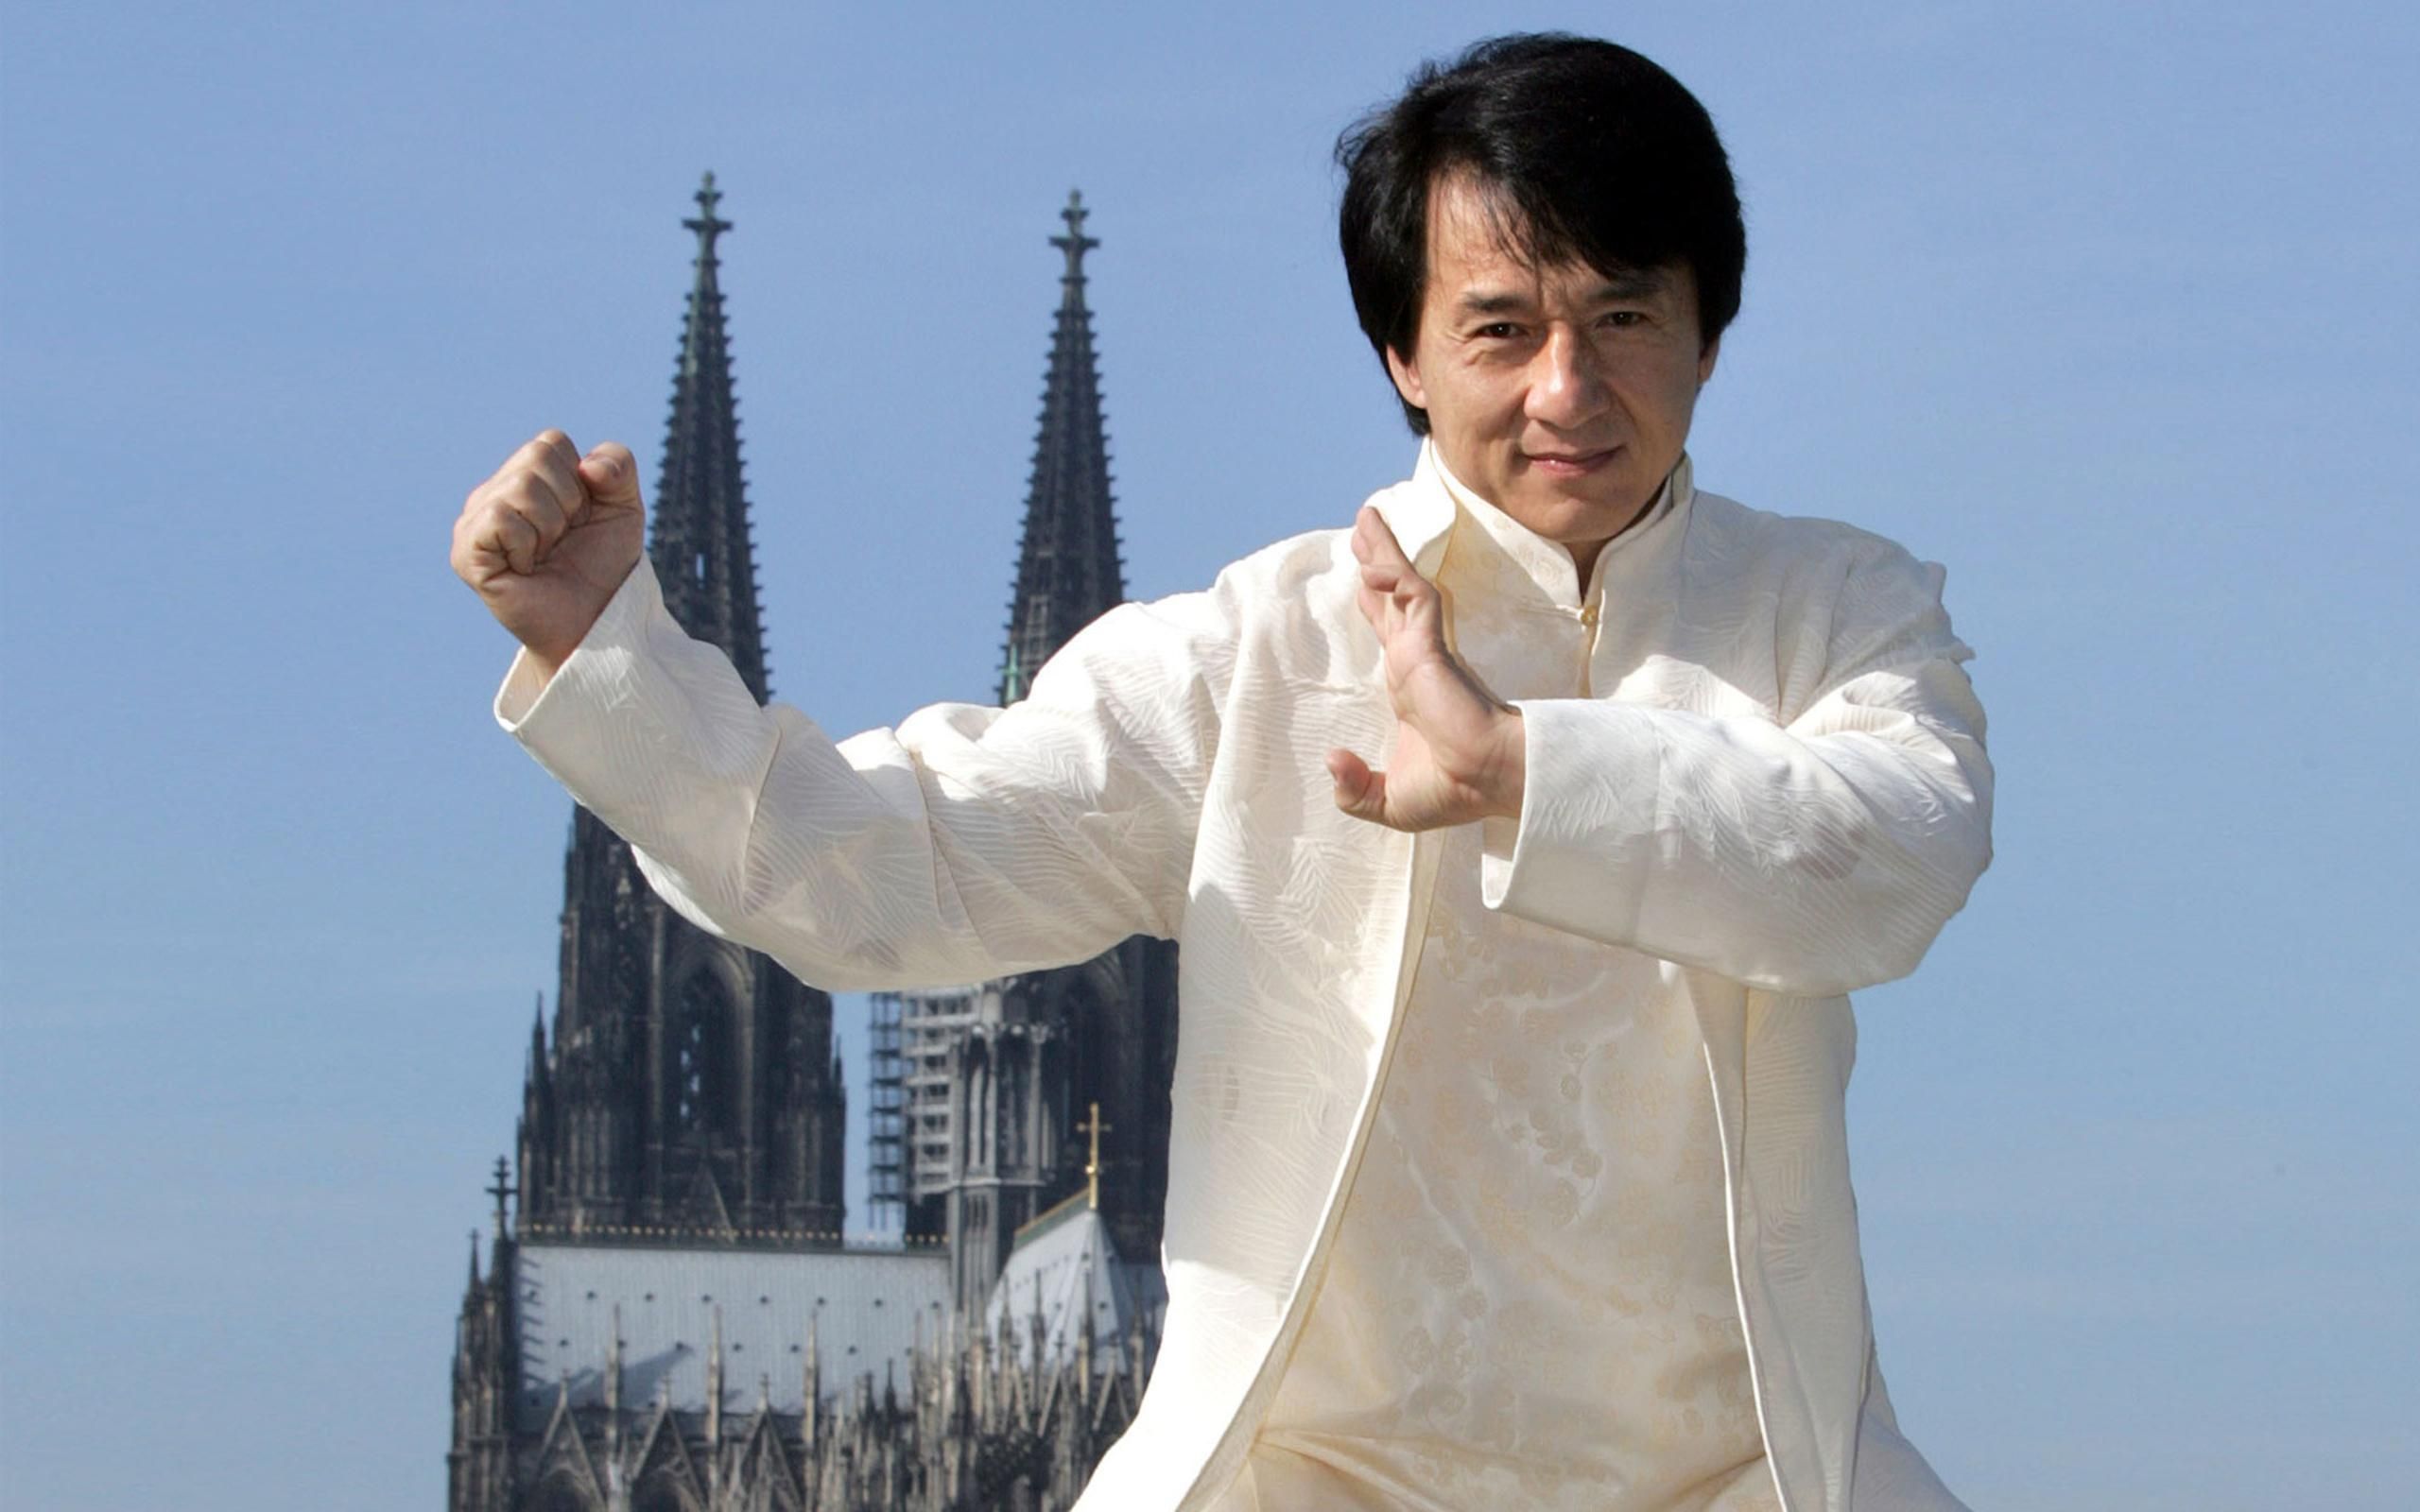 Jackie Chan a Hong Kong actor, martial artist, film director